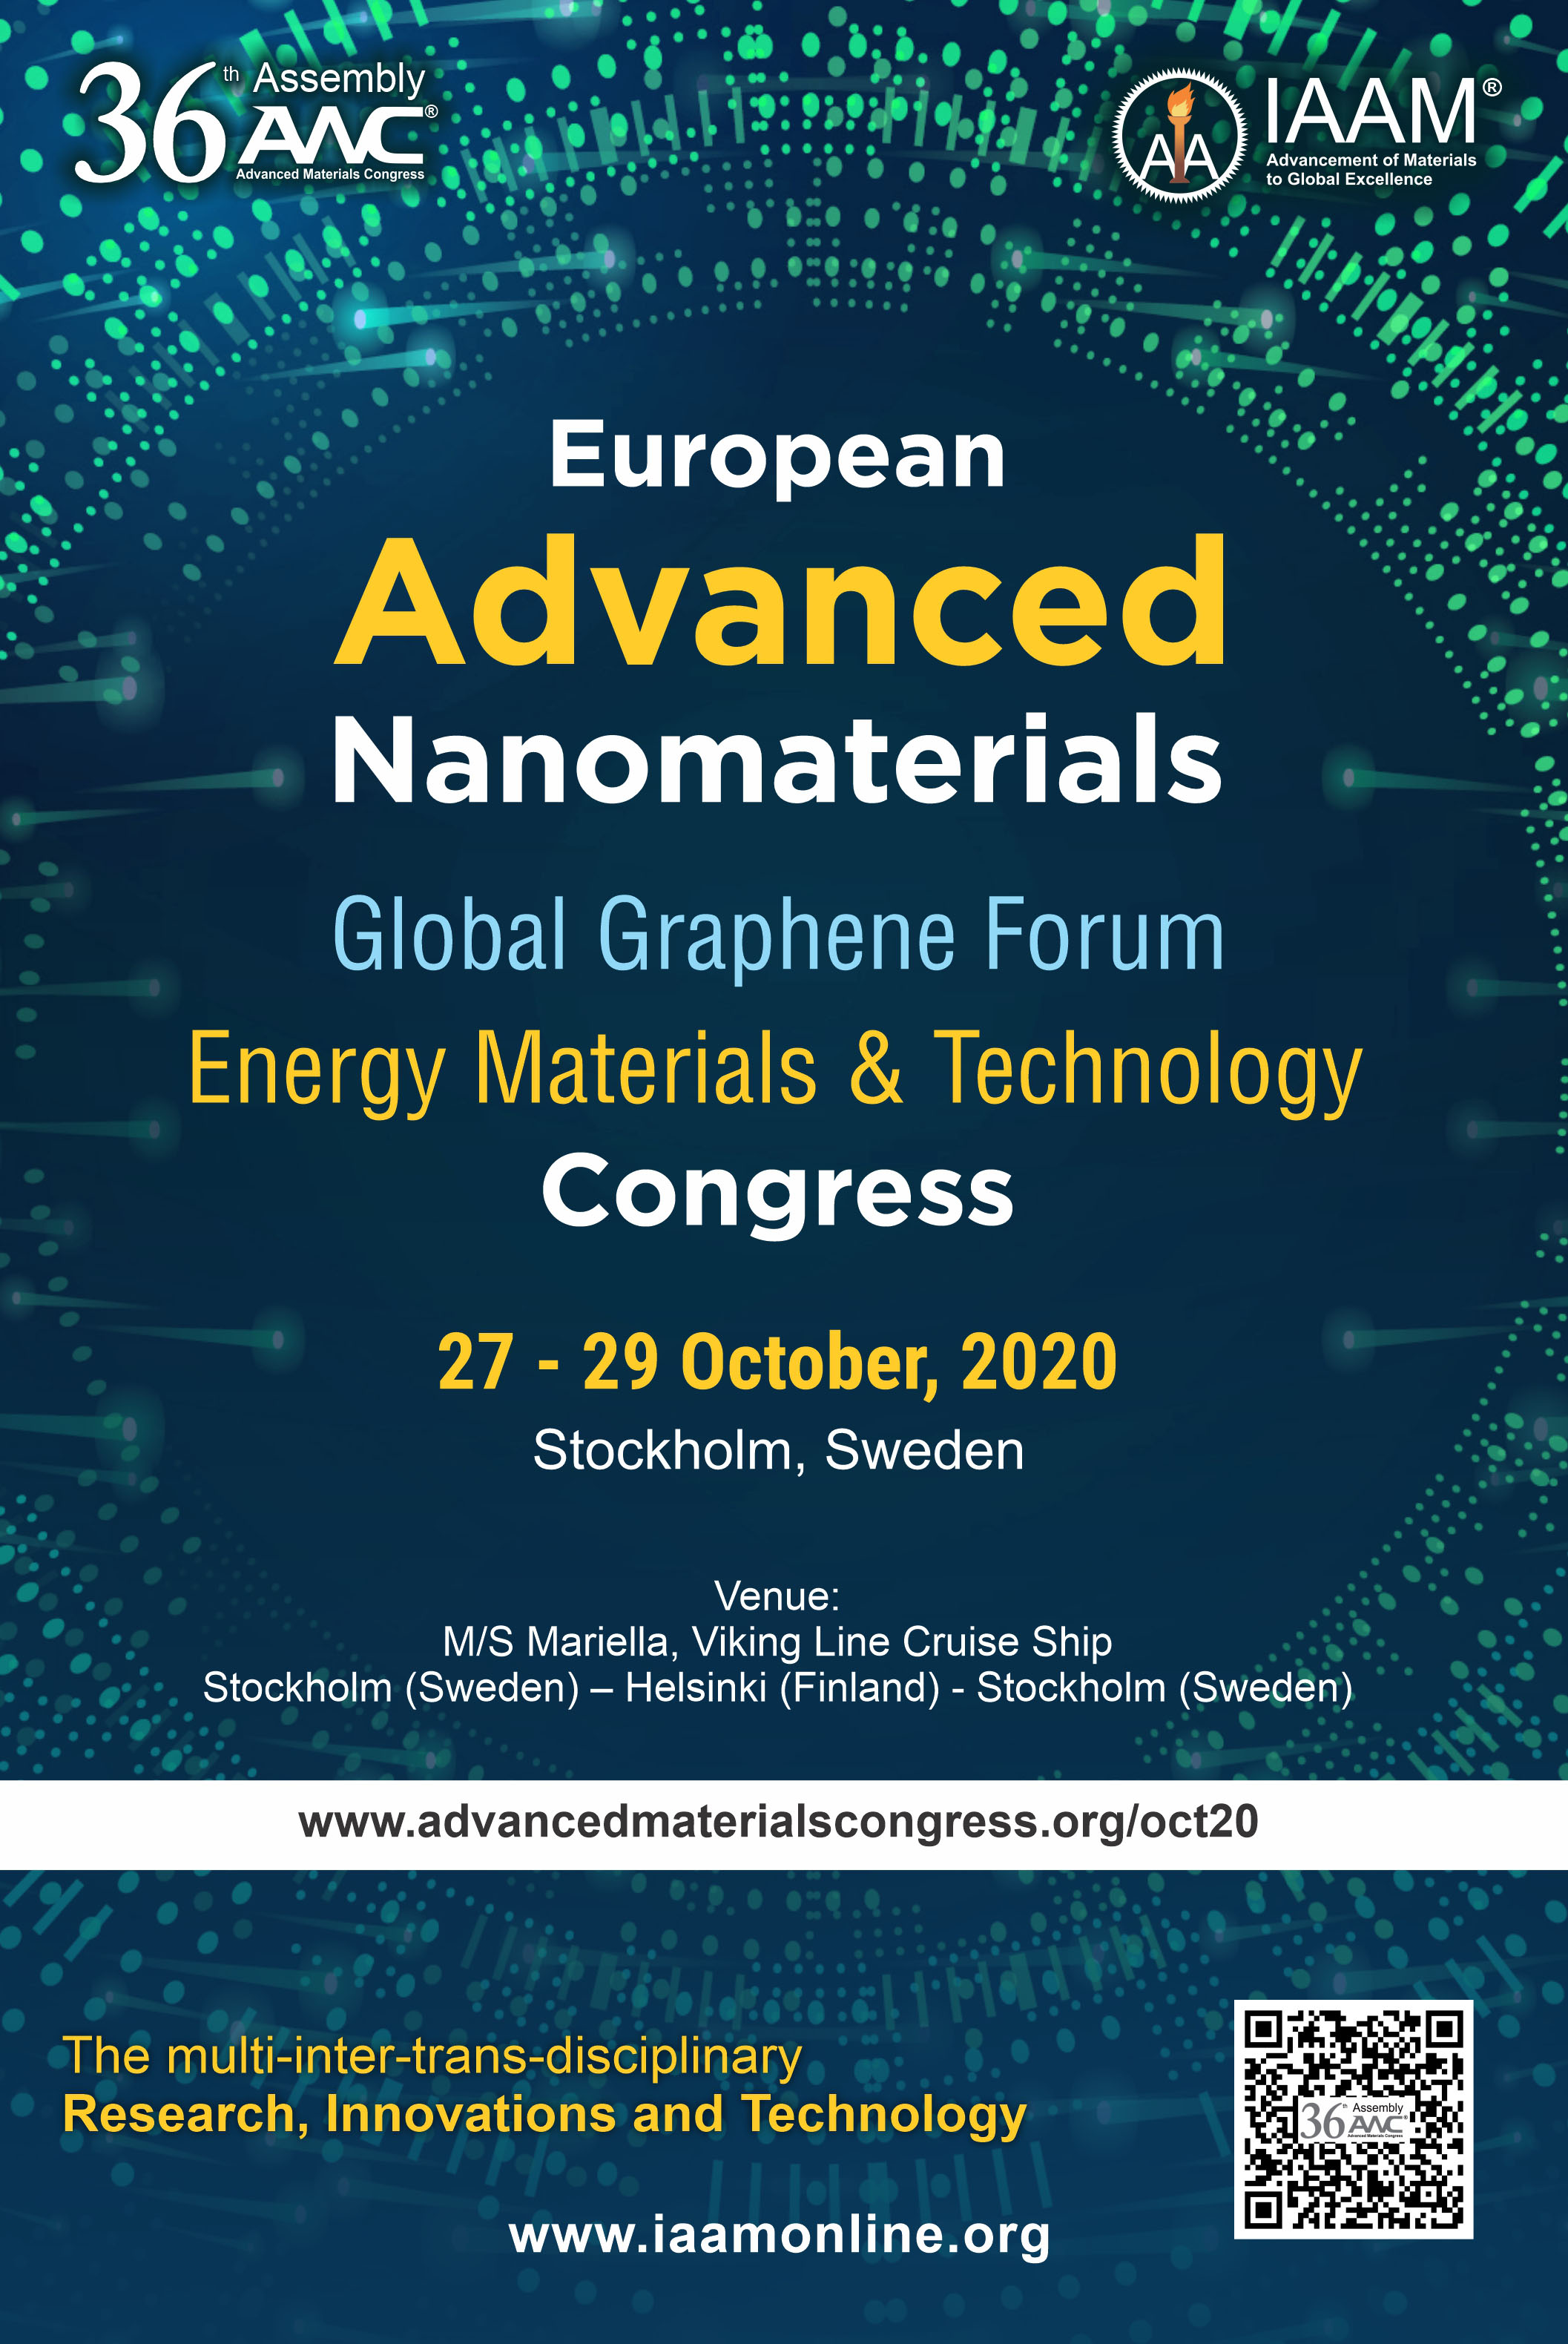 European Advanced Nanomaterials Congress, Stadsgården, Stockholm, Sweden